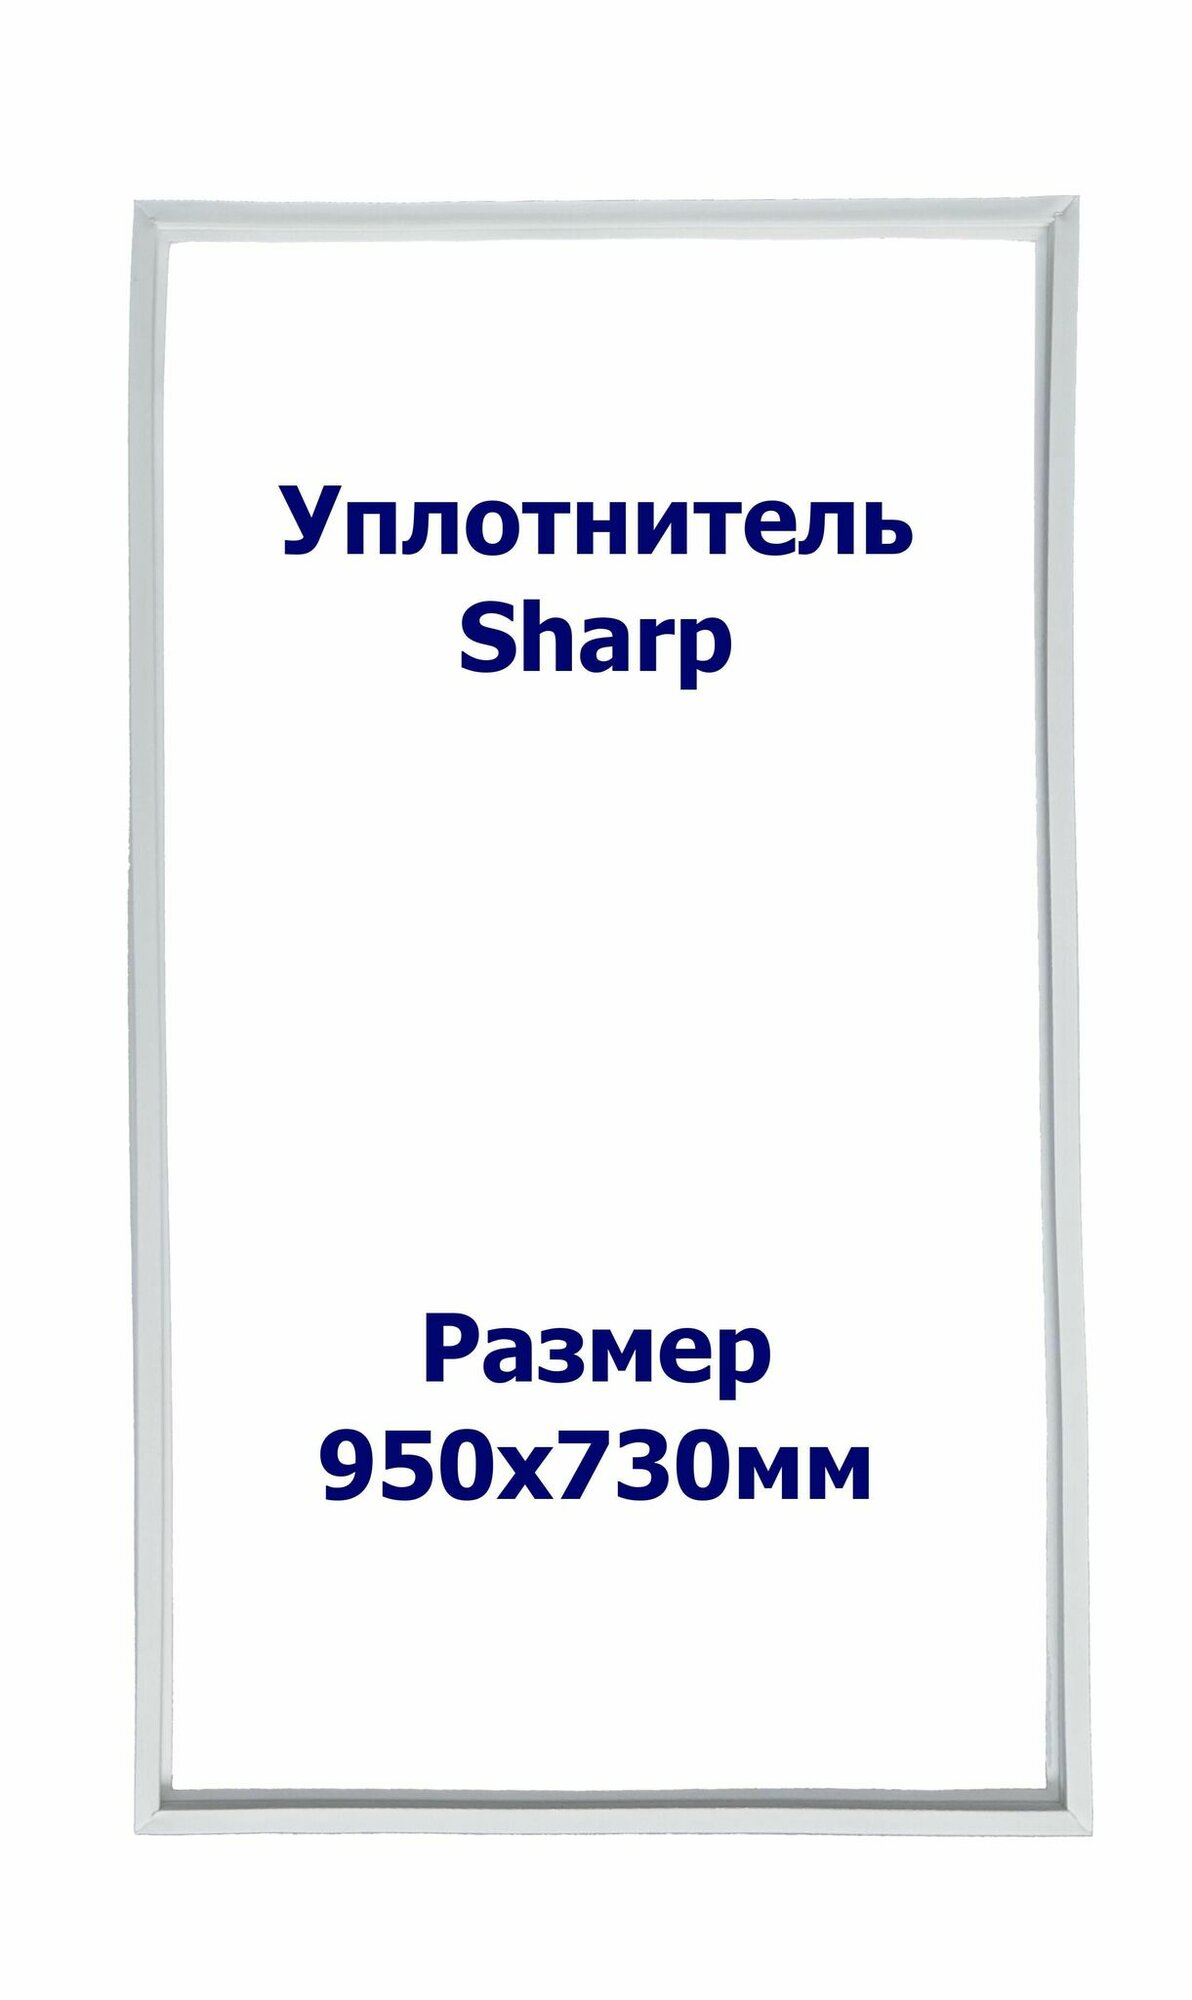 Уплотнитель Sharp SJ-59M-BE. х. к, Размер - 950х730 мм. SK